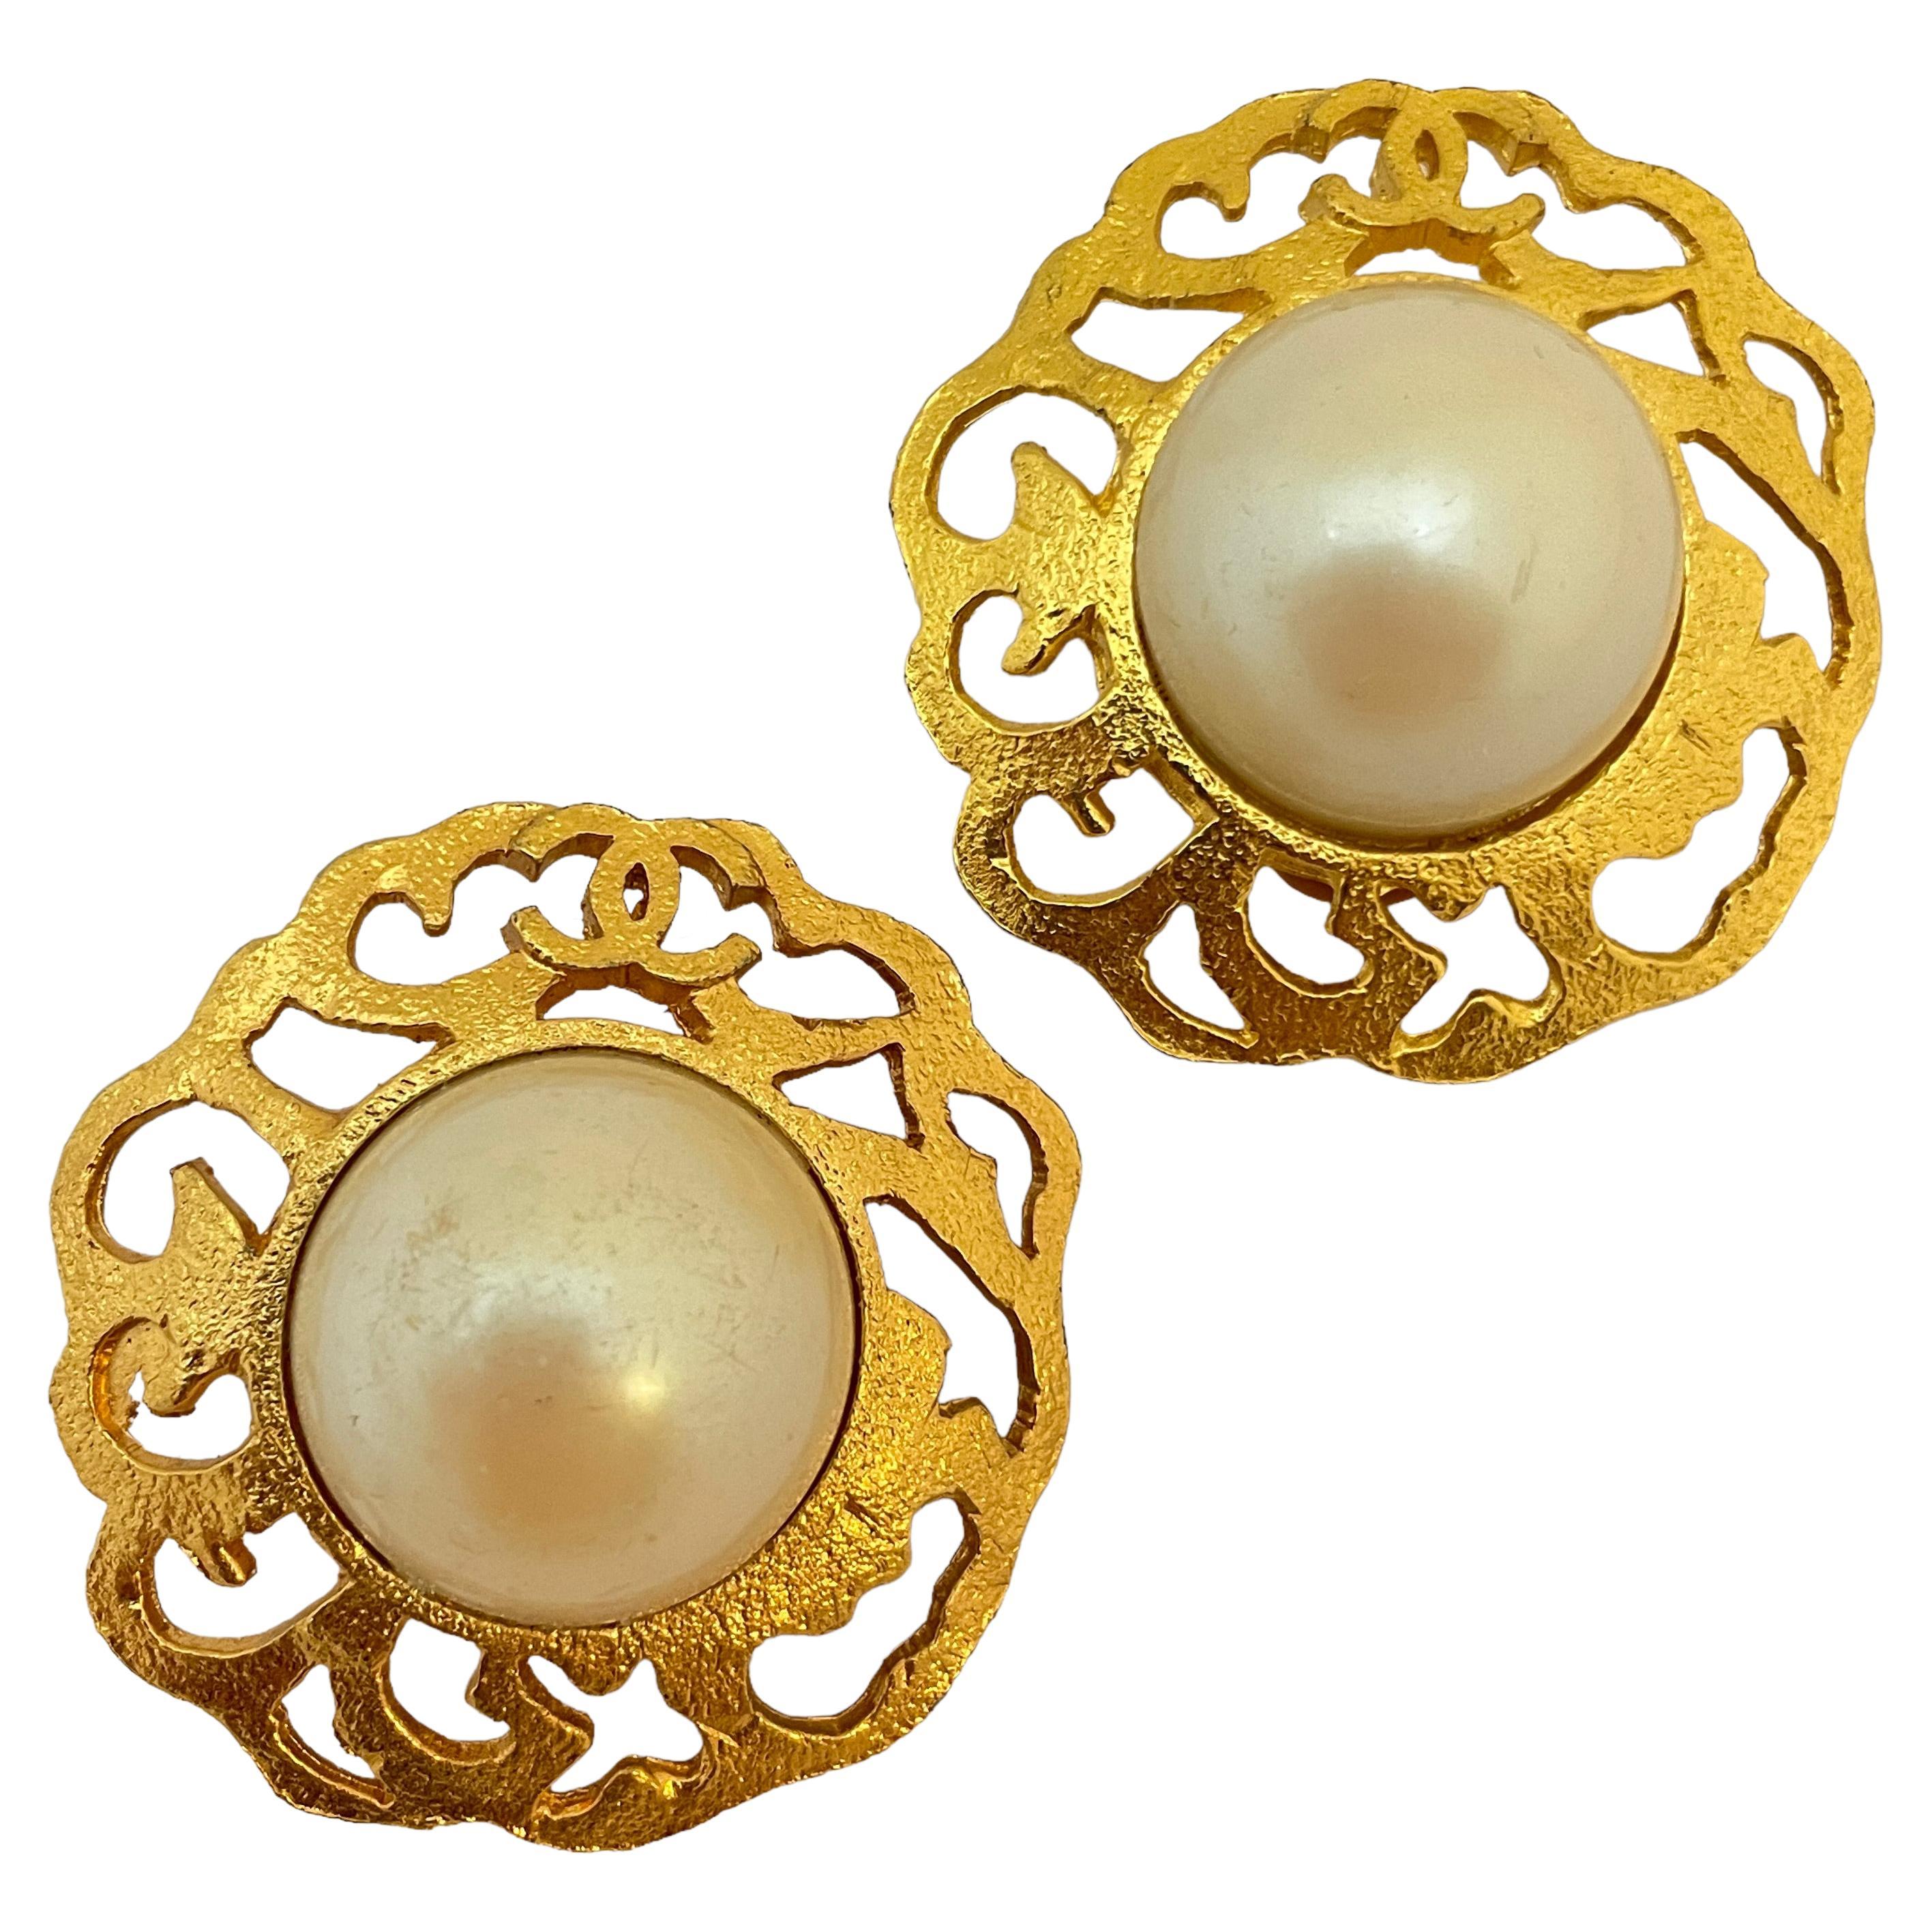 Vintage CHANEL gold CC logo pearl designer runway clip on earrings